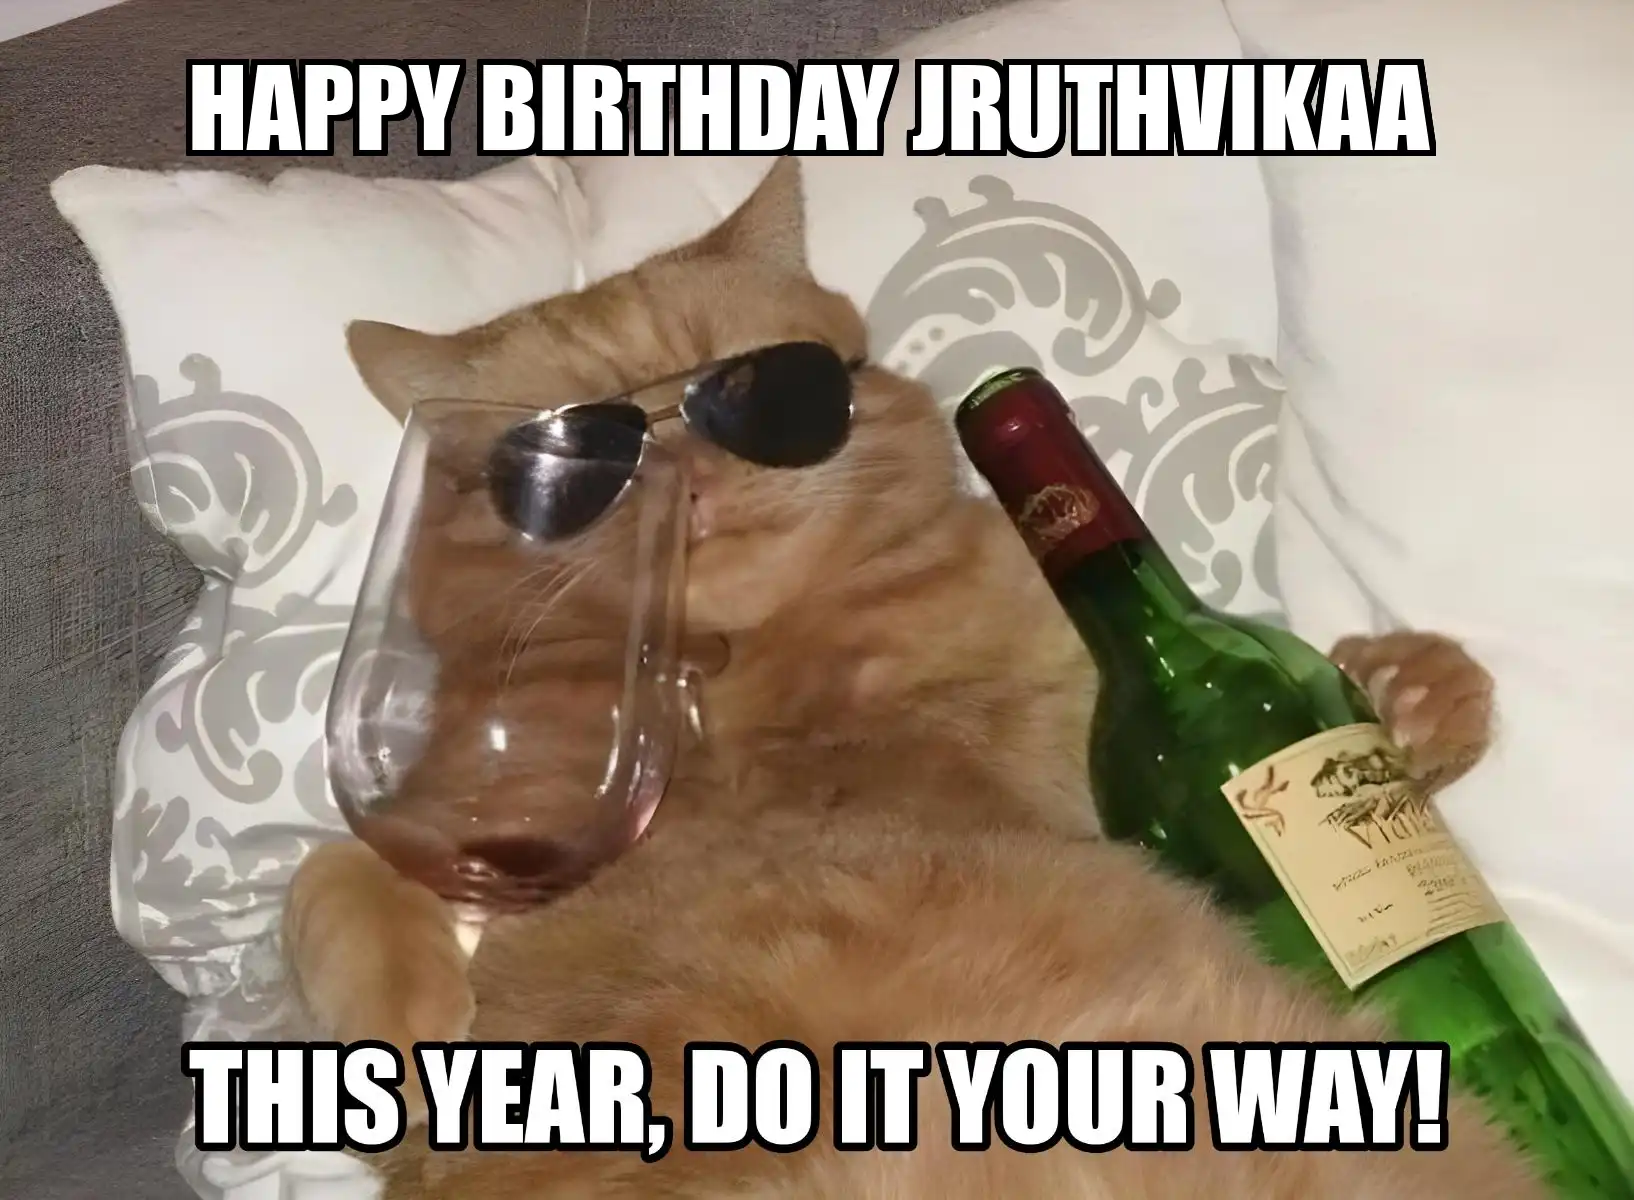 Happy Birthday Jruthvikaa This Year Do It Your Way Meme